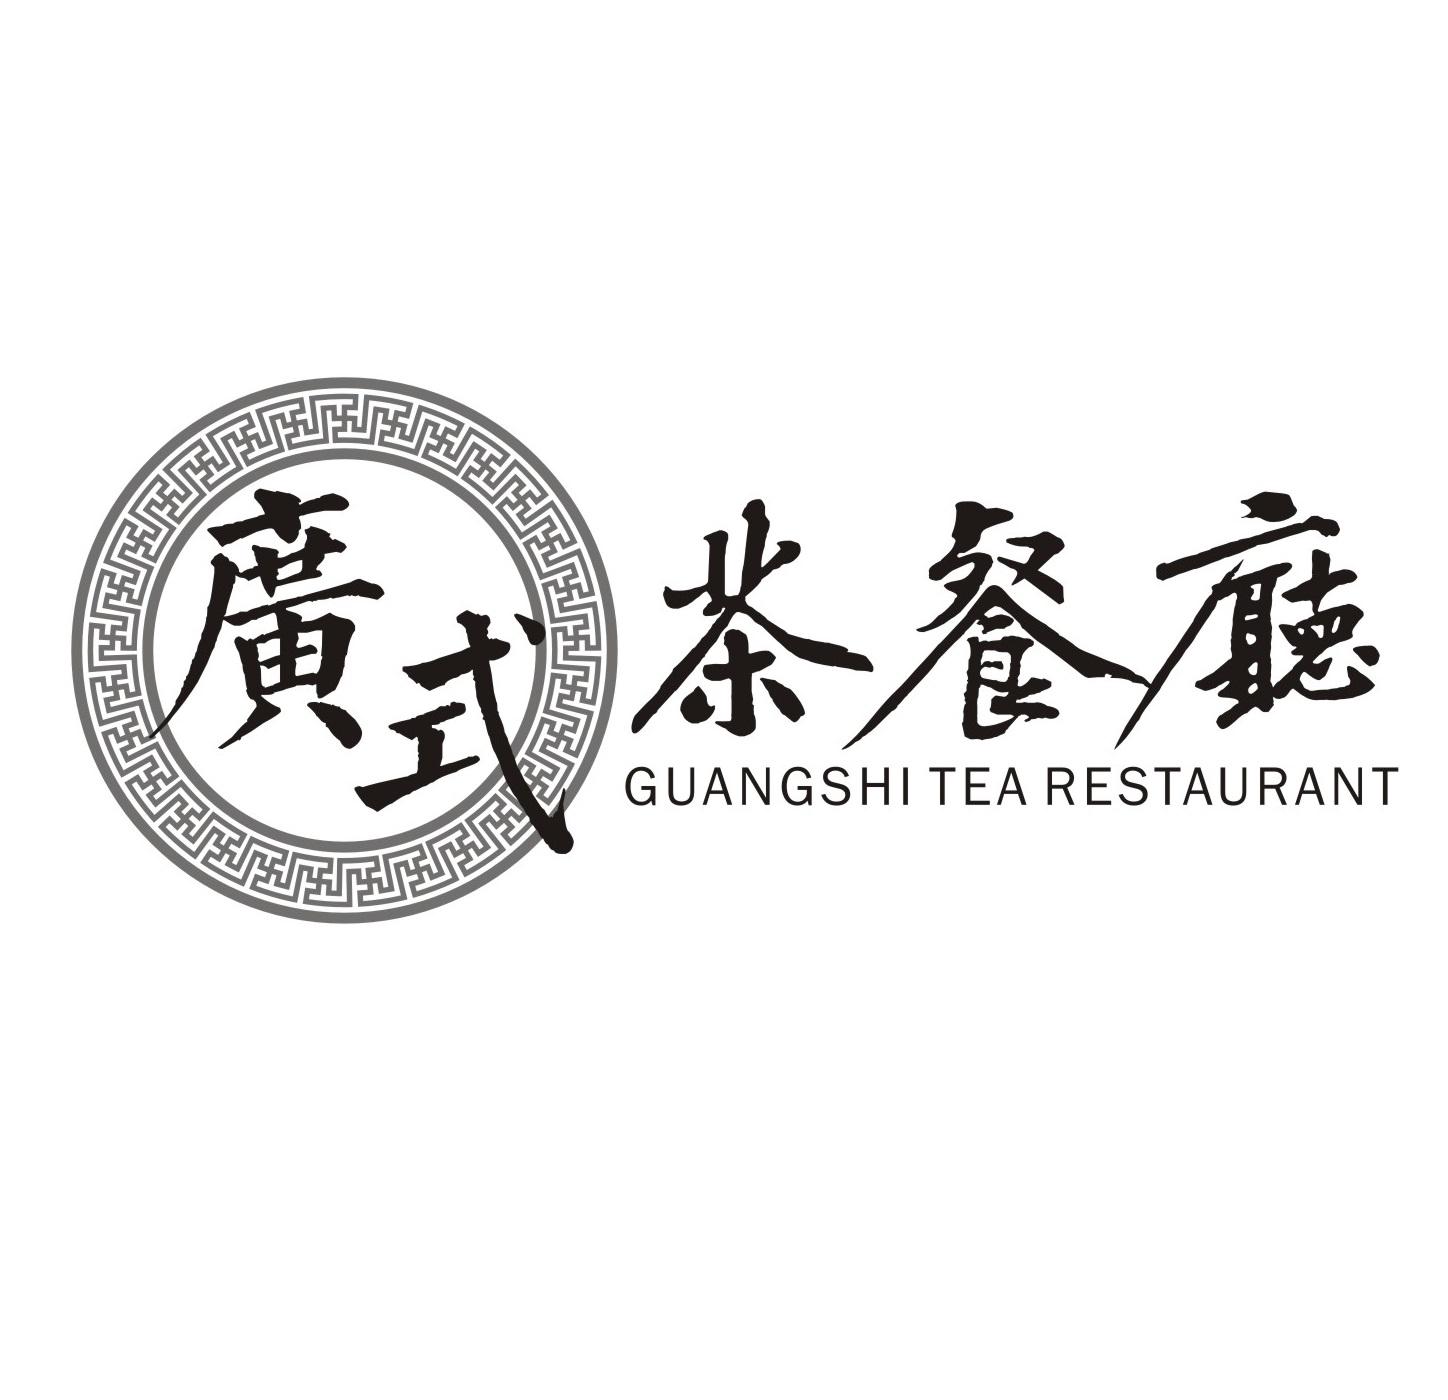 广式 茶餐厅 guangshi tea restaurant 商标公告